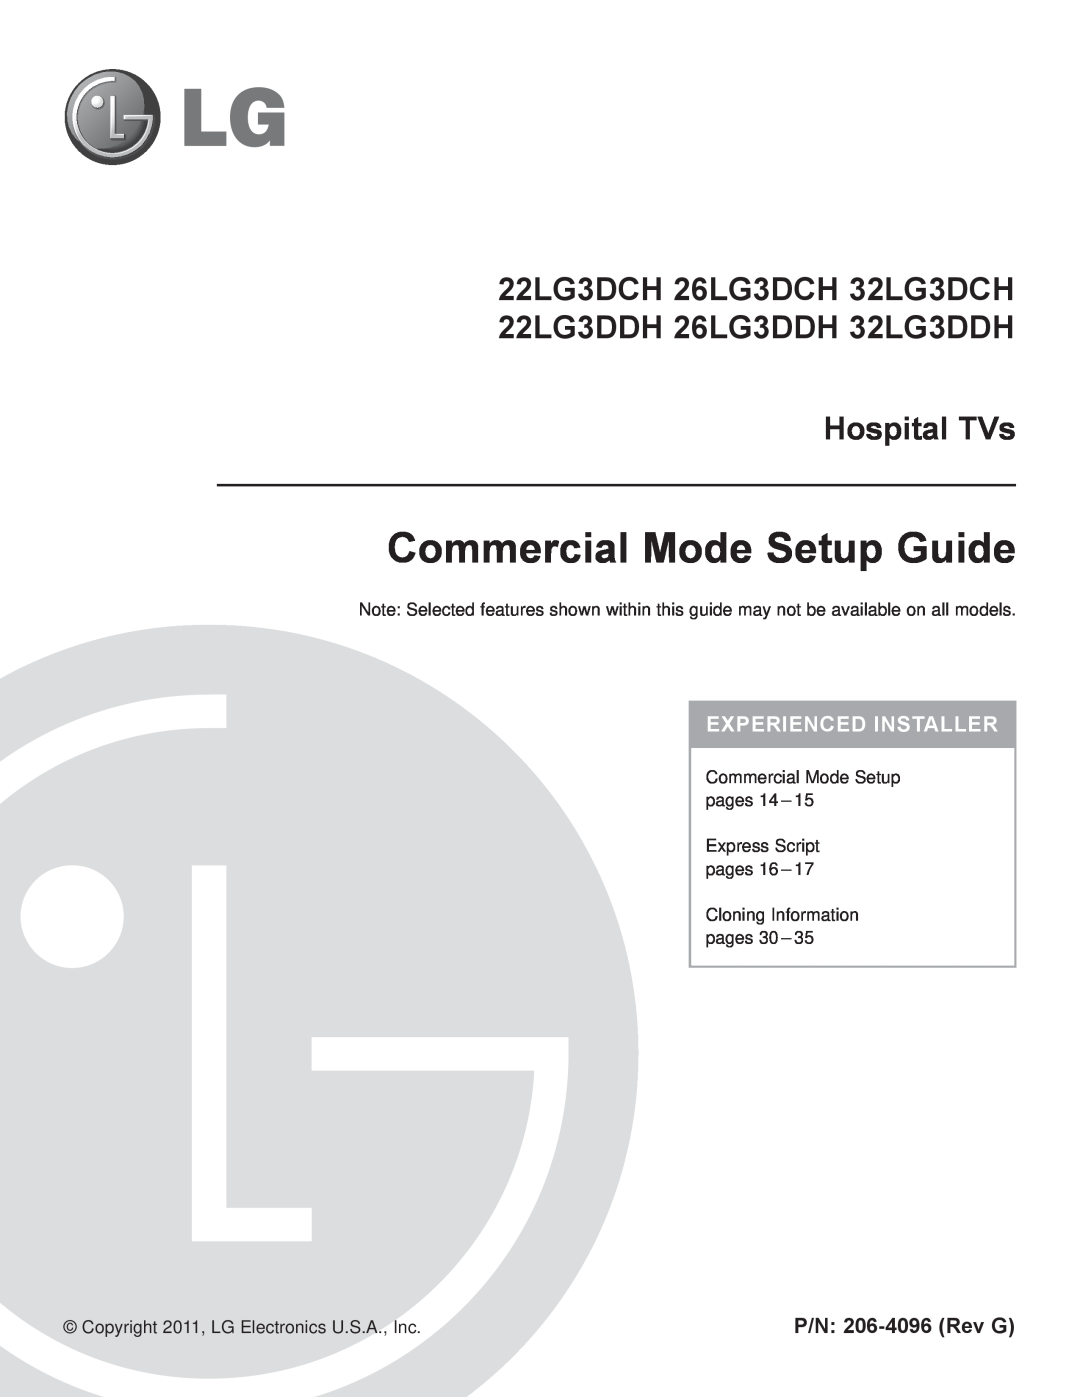 LG Electronics 32LG3DCH, 32LG3DDH setup guide Commercial Mode Setup Guide, P/N 206-4096 Rev G, Experienced Installer 